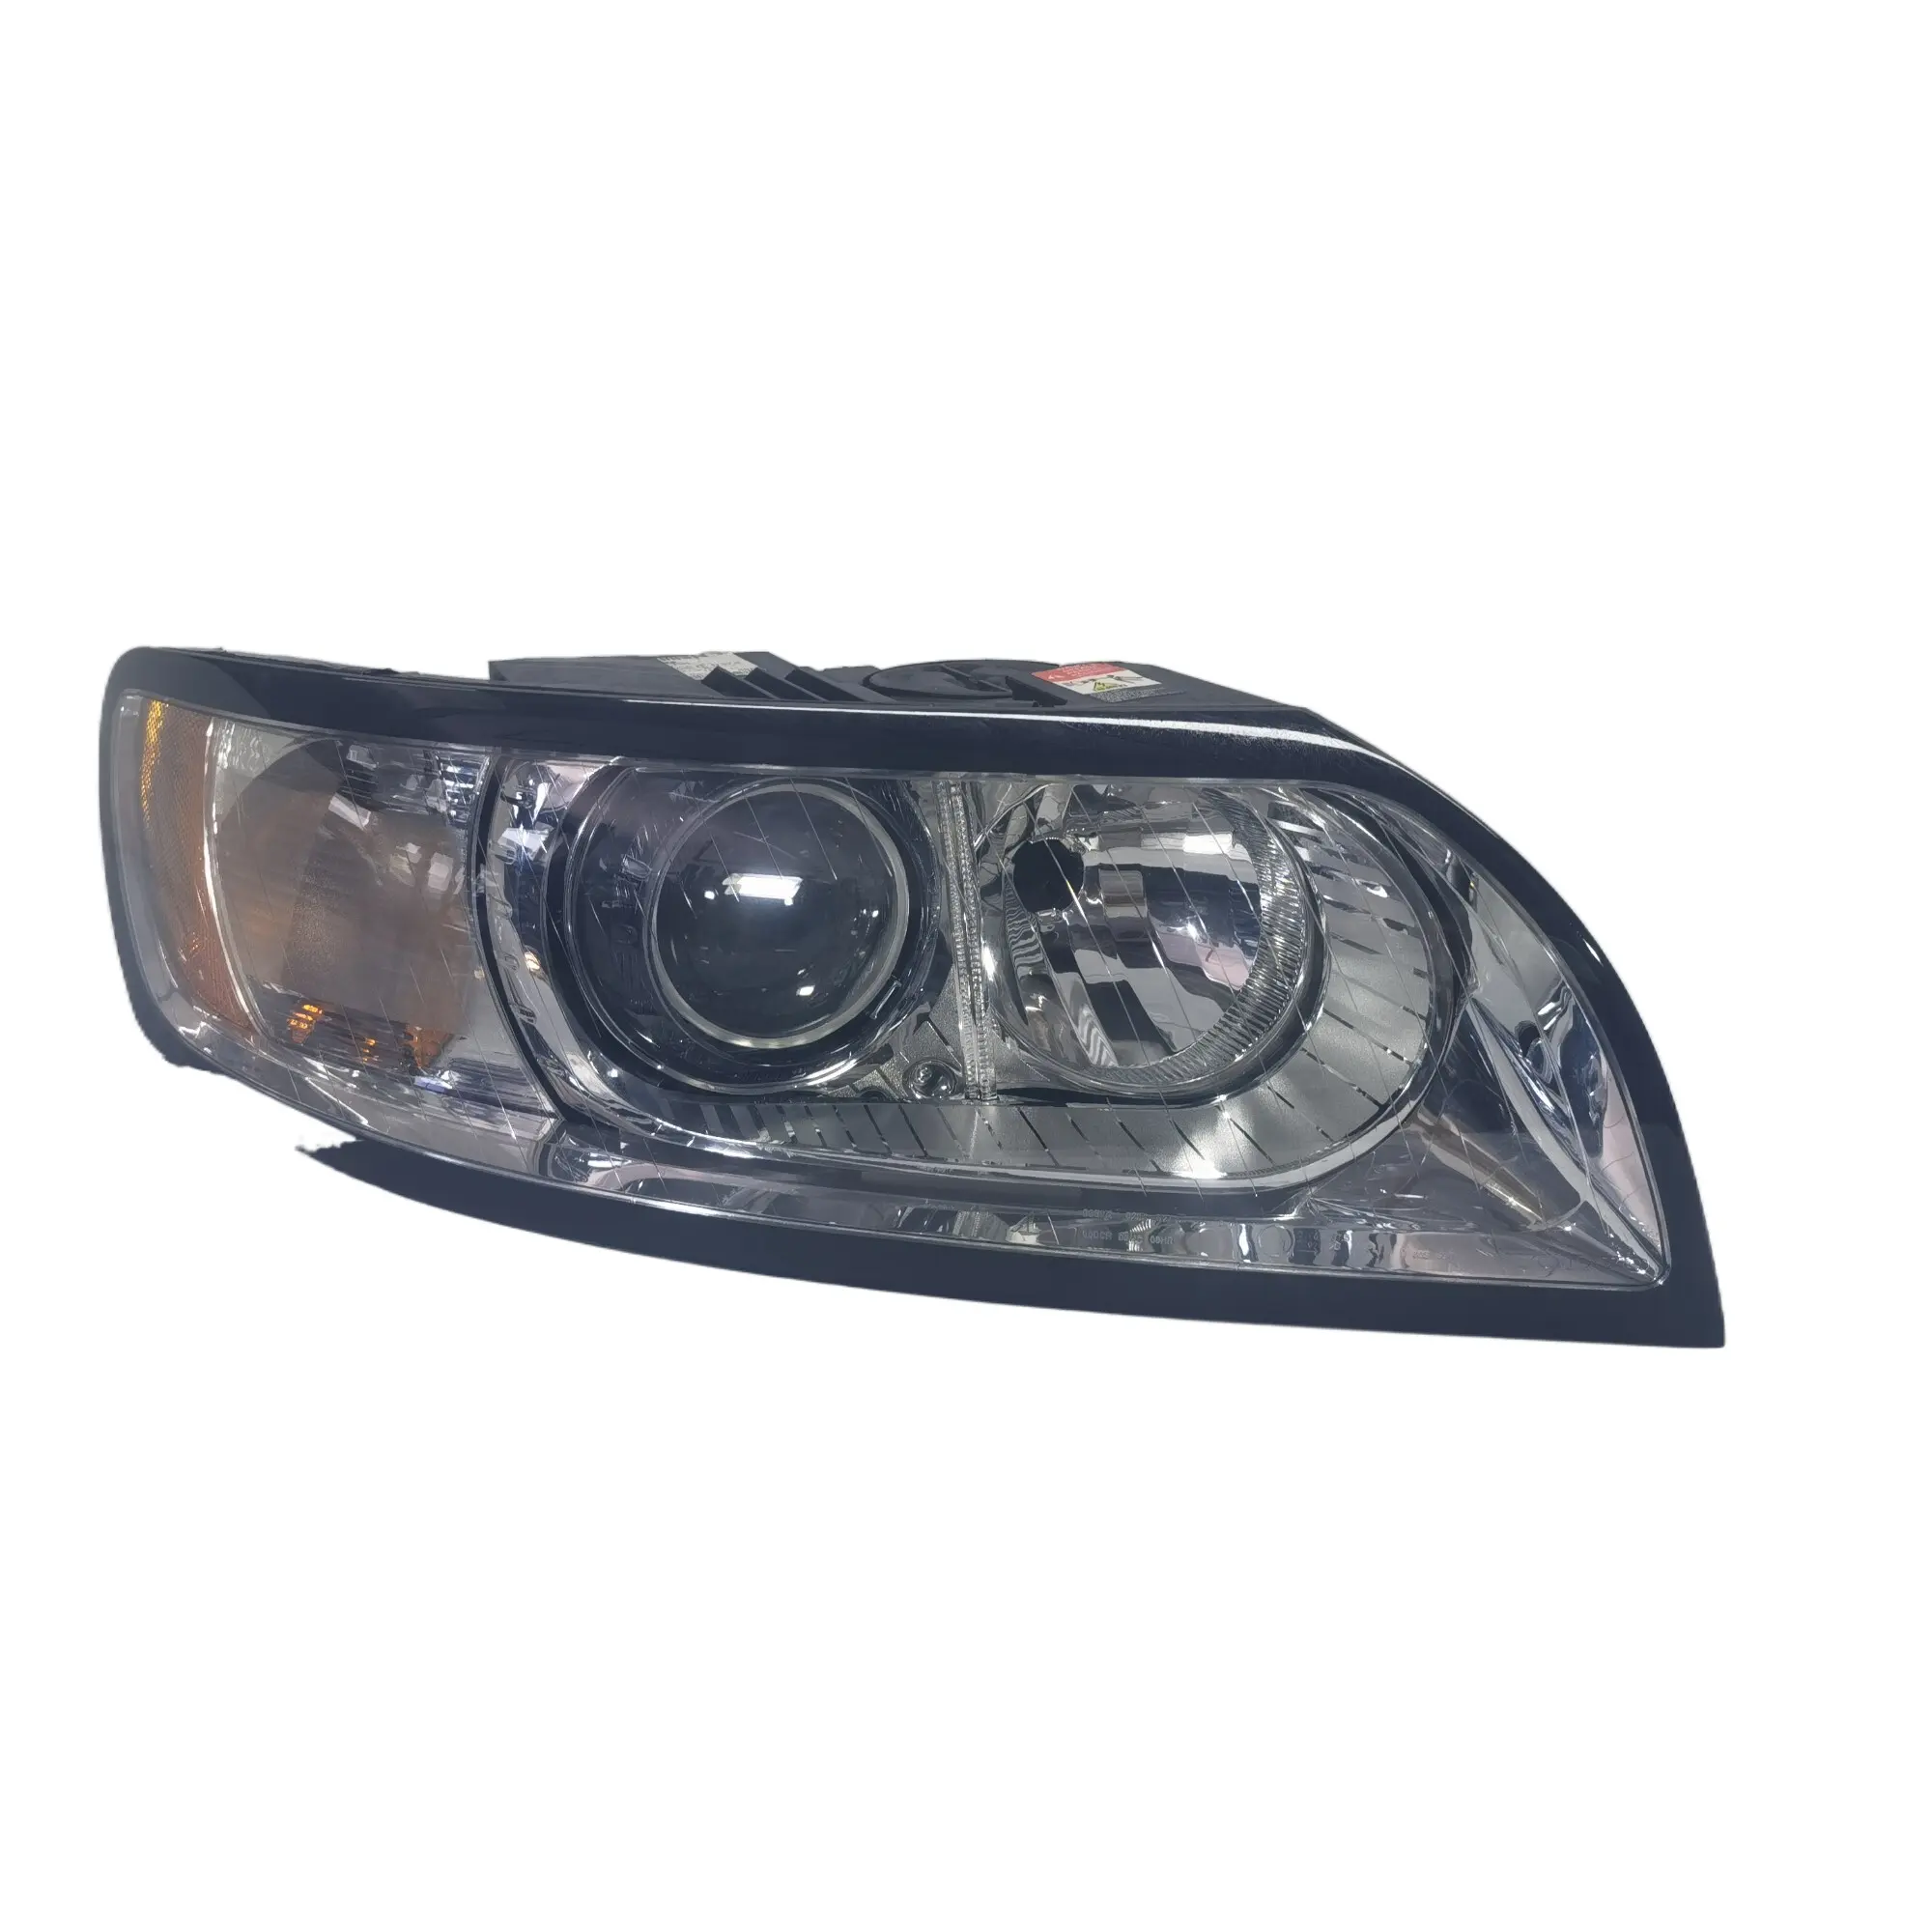 for VOLVO S40 headlight car S40 Lci front headlight 2012 2013 2014 2015 2016 year auto lighting systems